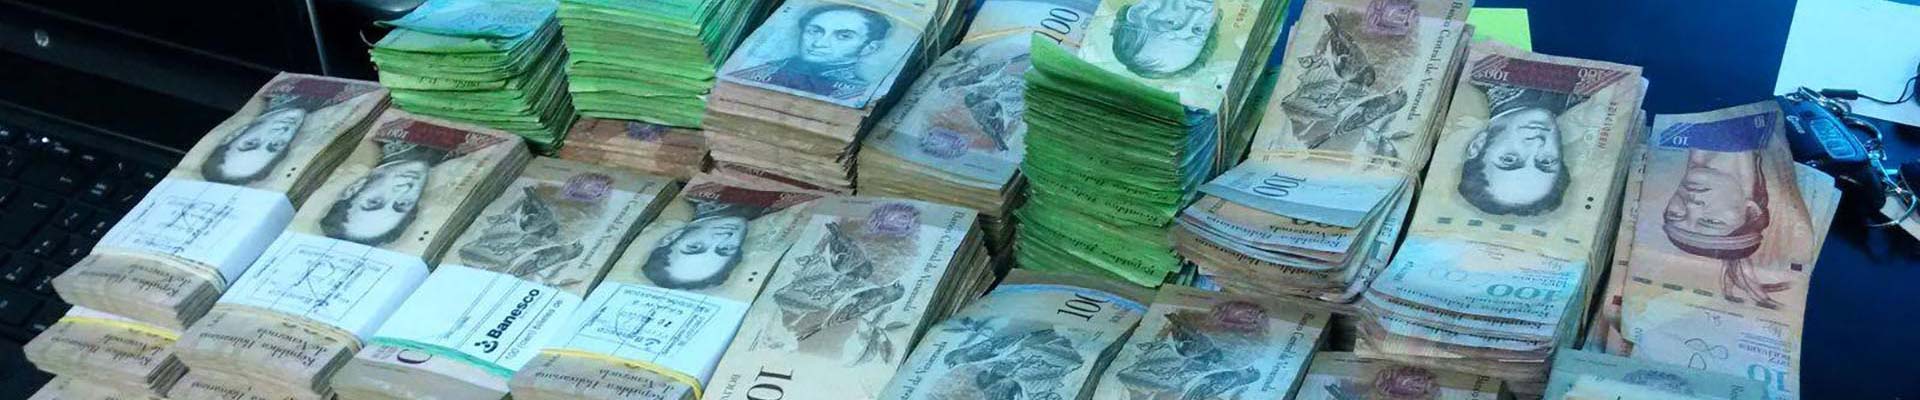 Inflation of the Bolivar: Venezuela 2016 Issues header image